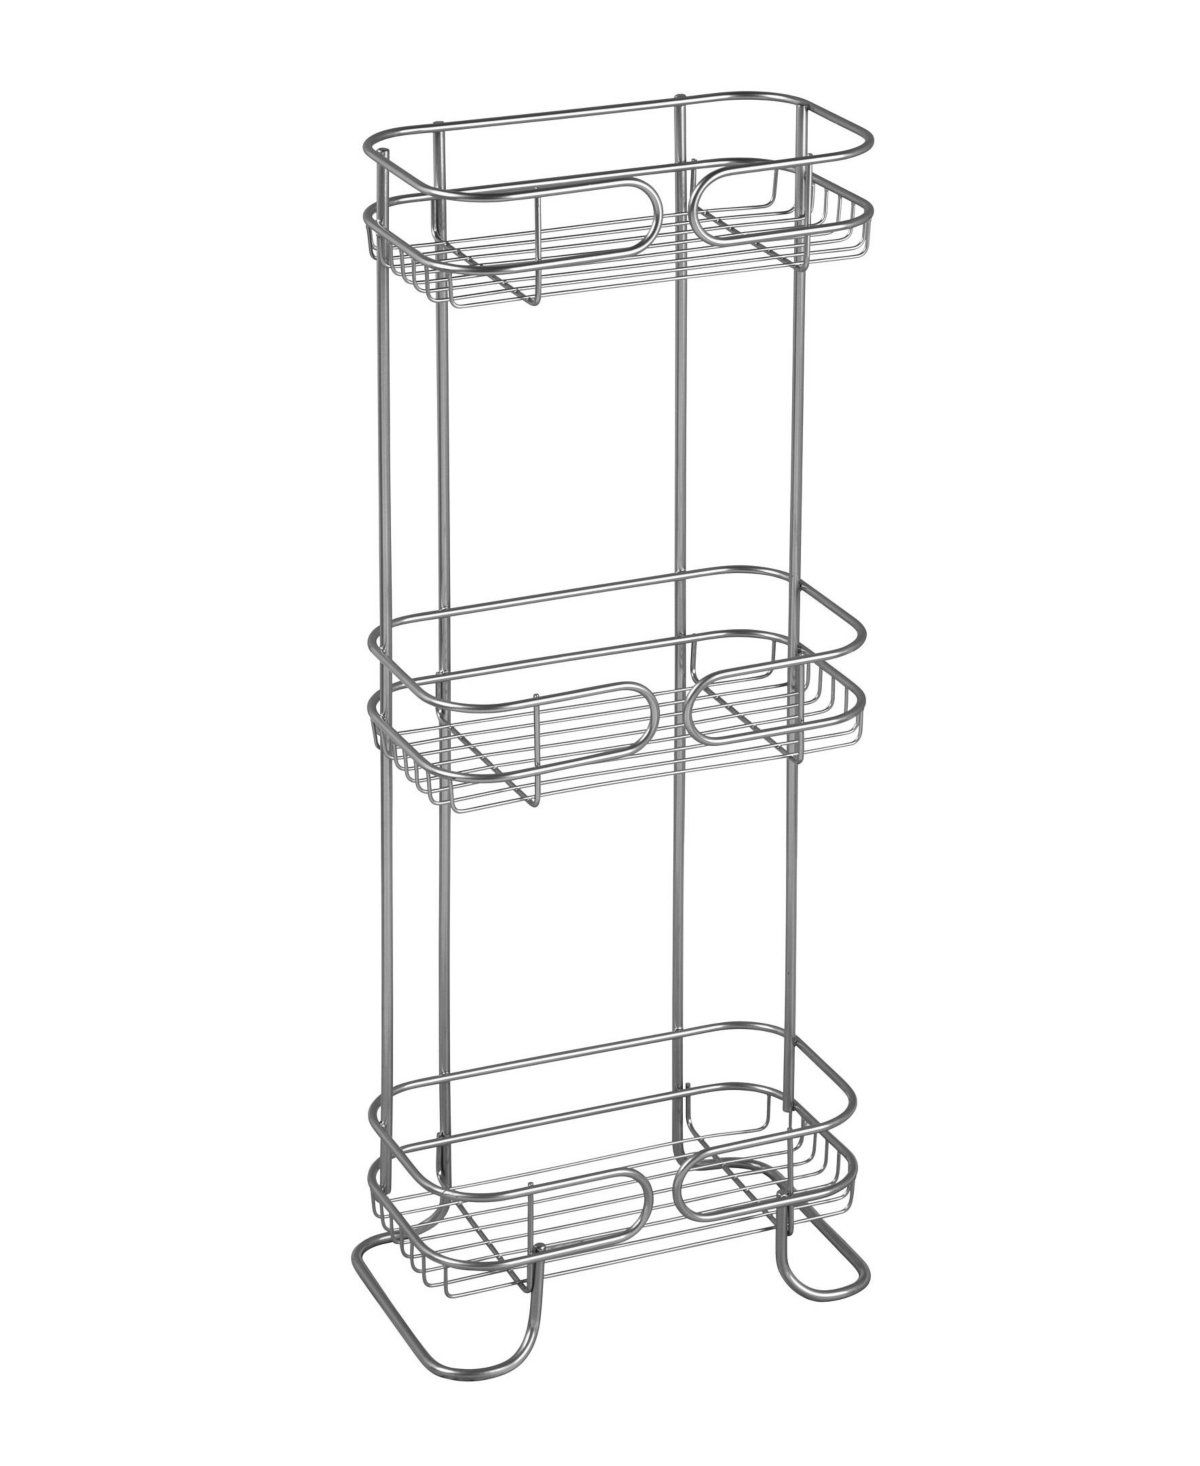 Idesign Neo Wire 3 Shelf Tower Shower Organization System In Silver-tone